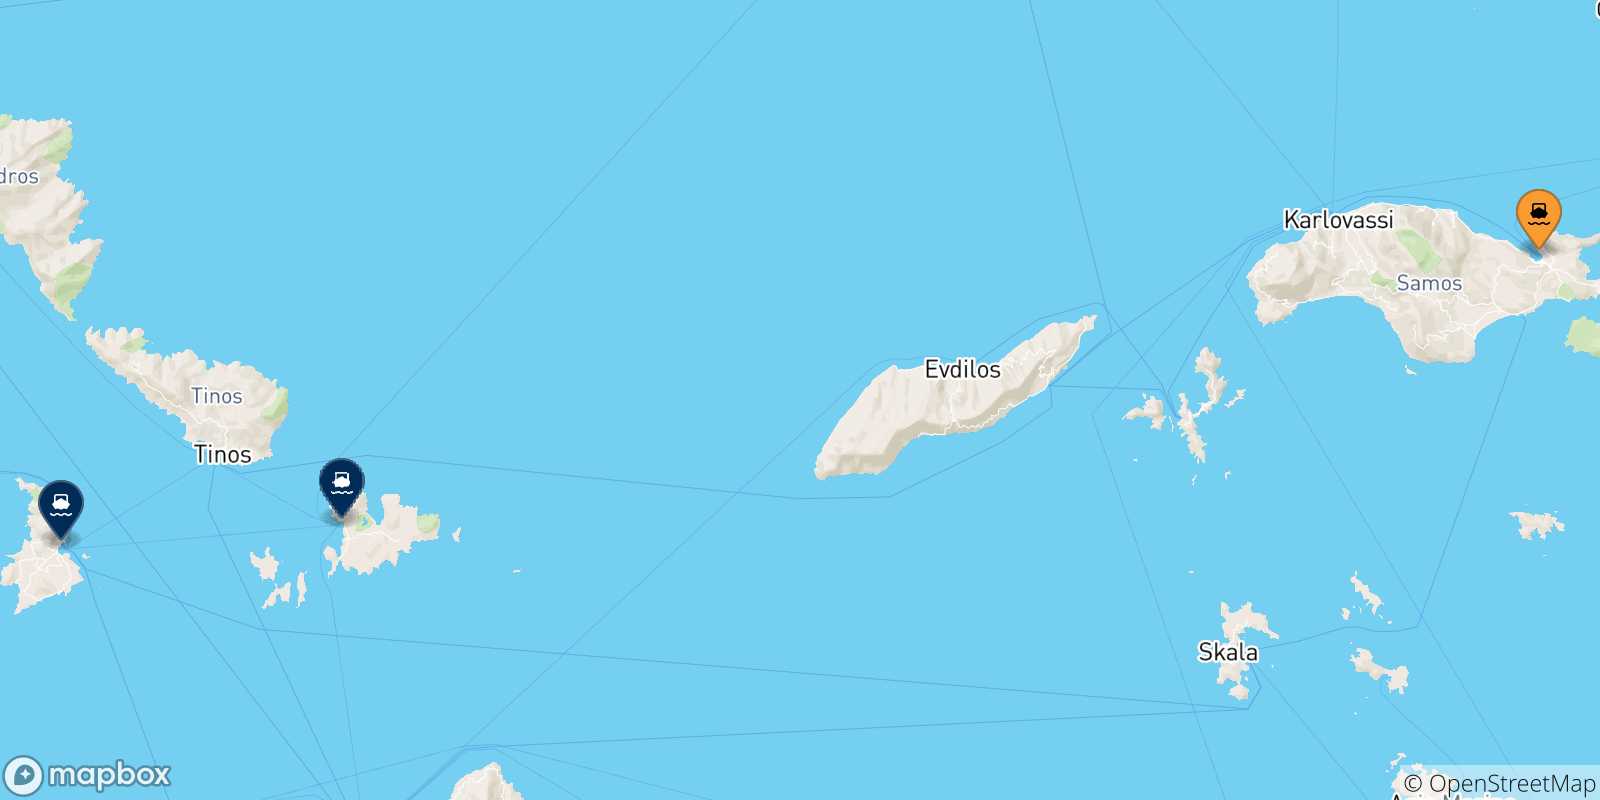 Mappa delle possibili rotte tra Vathi (Samos) e le Isole Cicladi